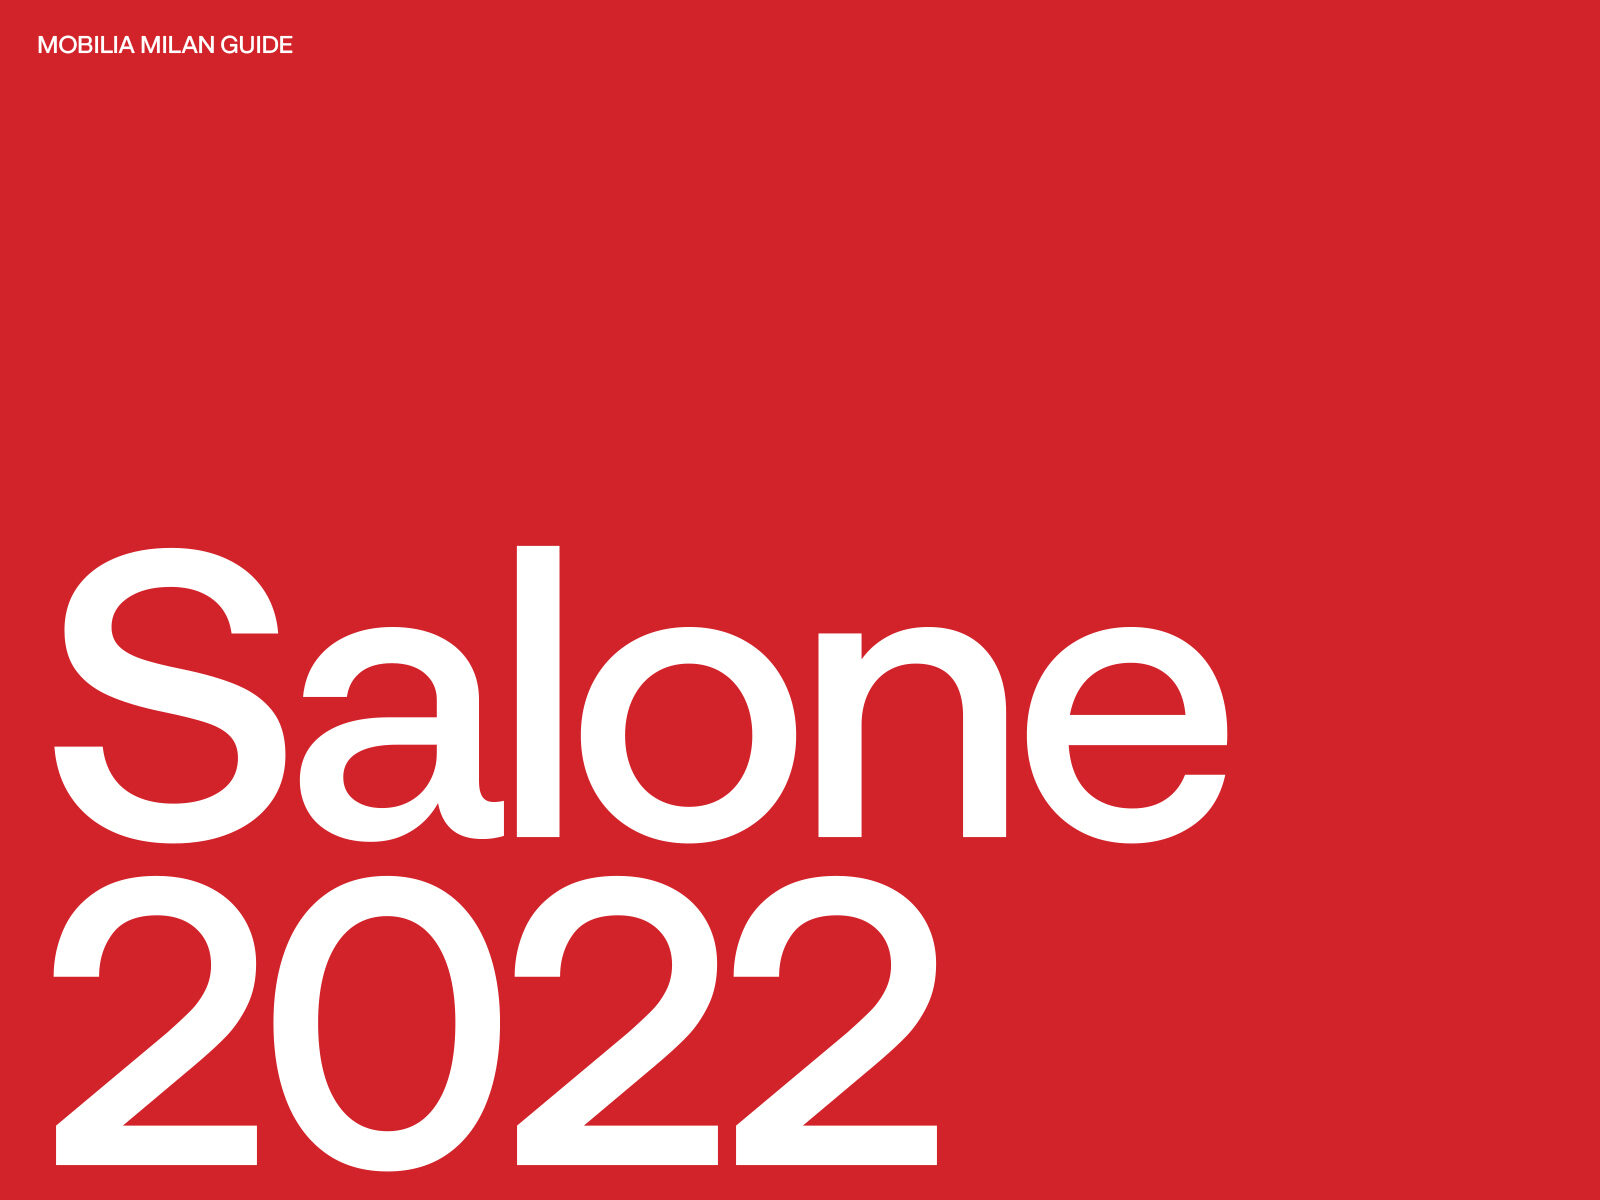 Mobilia Webiste More Mobilia Storie Milan 2022 10